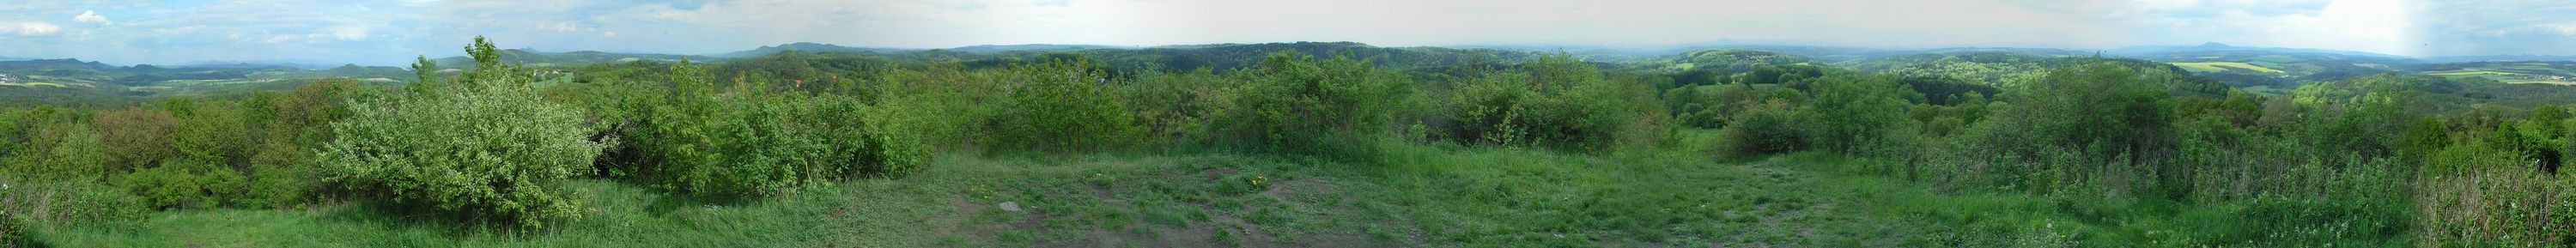 Panorama vrcholu Kokořínska